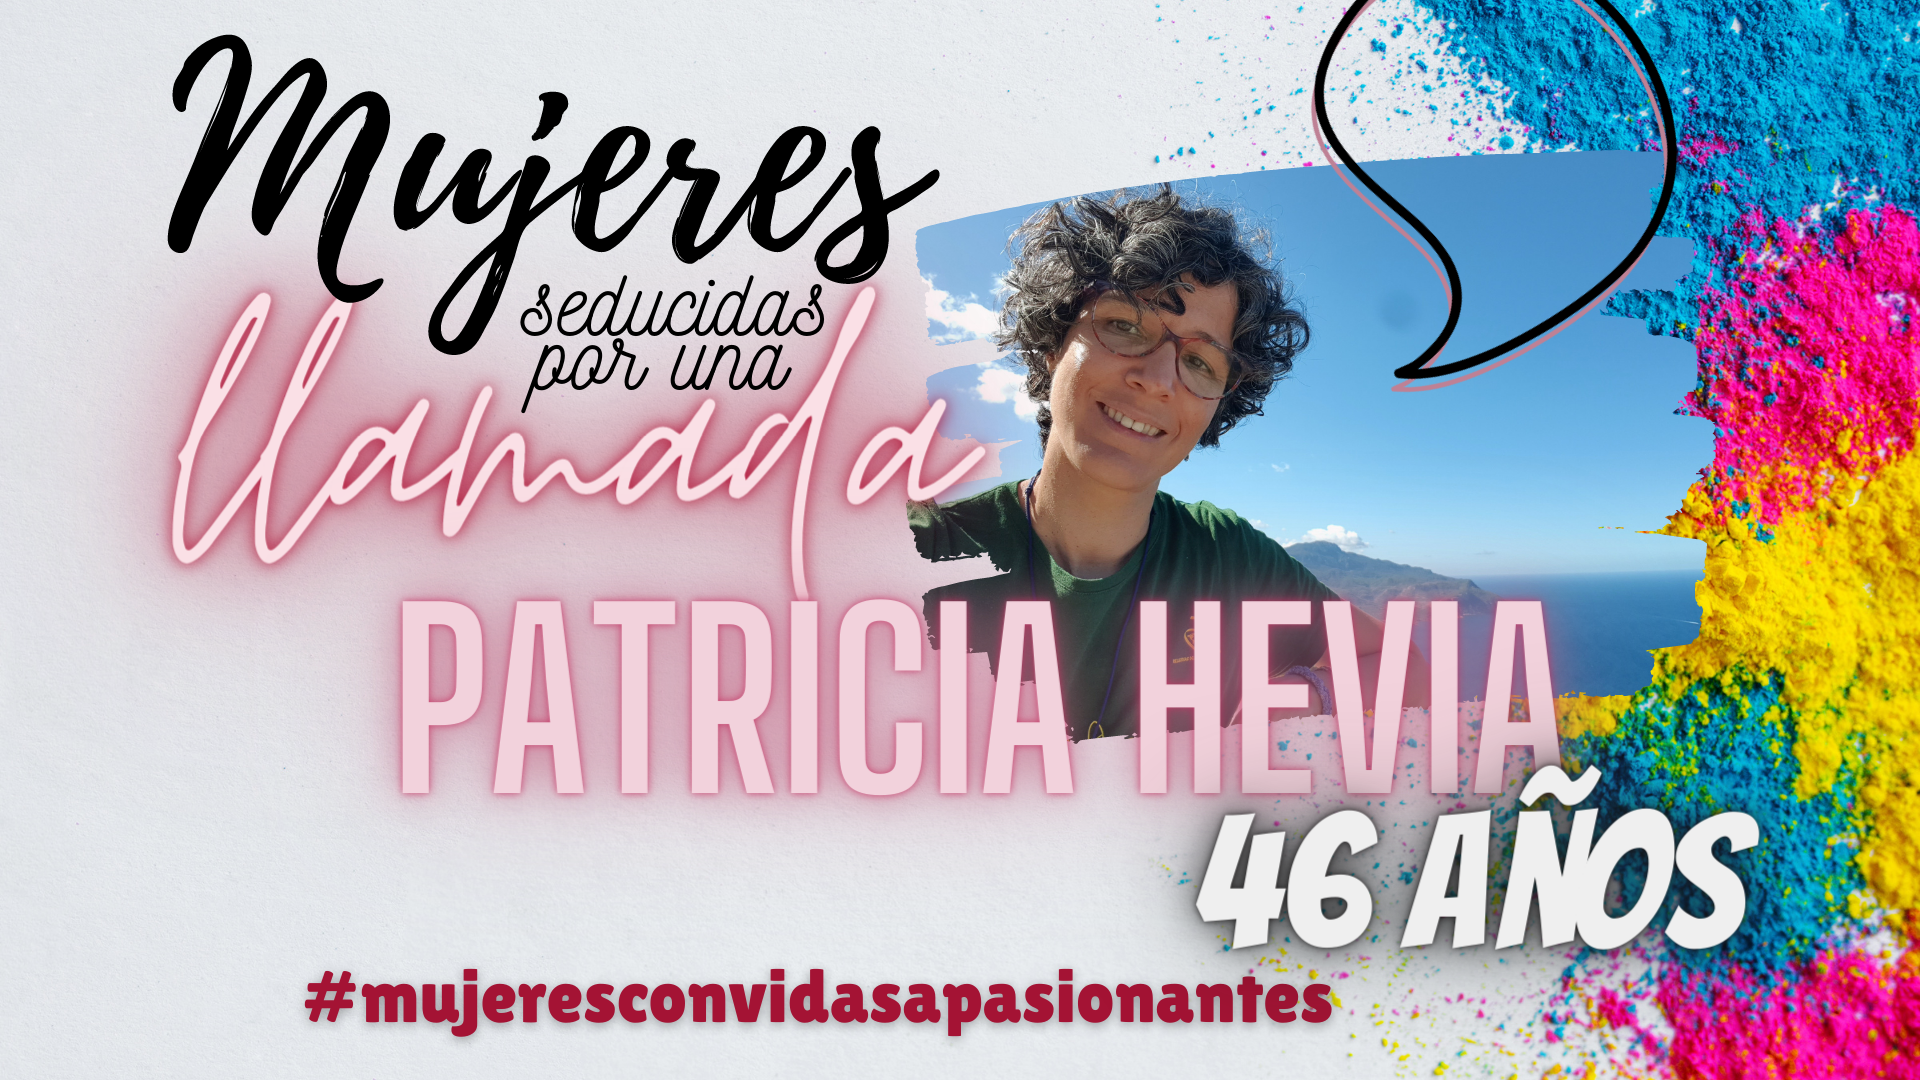 Mujeres con vidas apasionantes Patricia Hevia